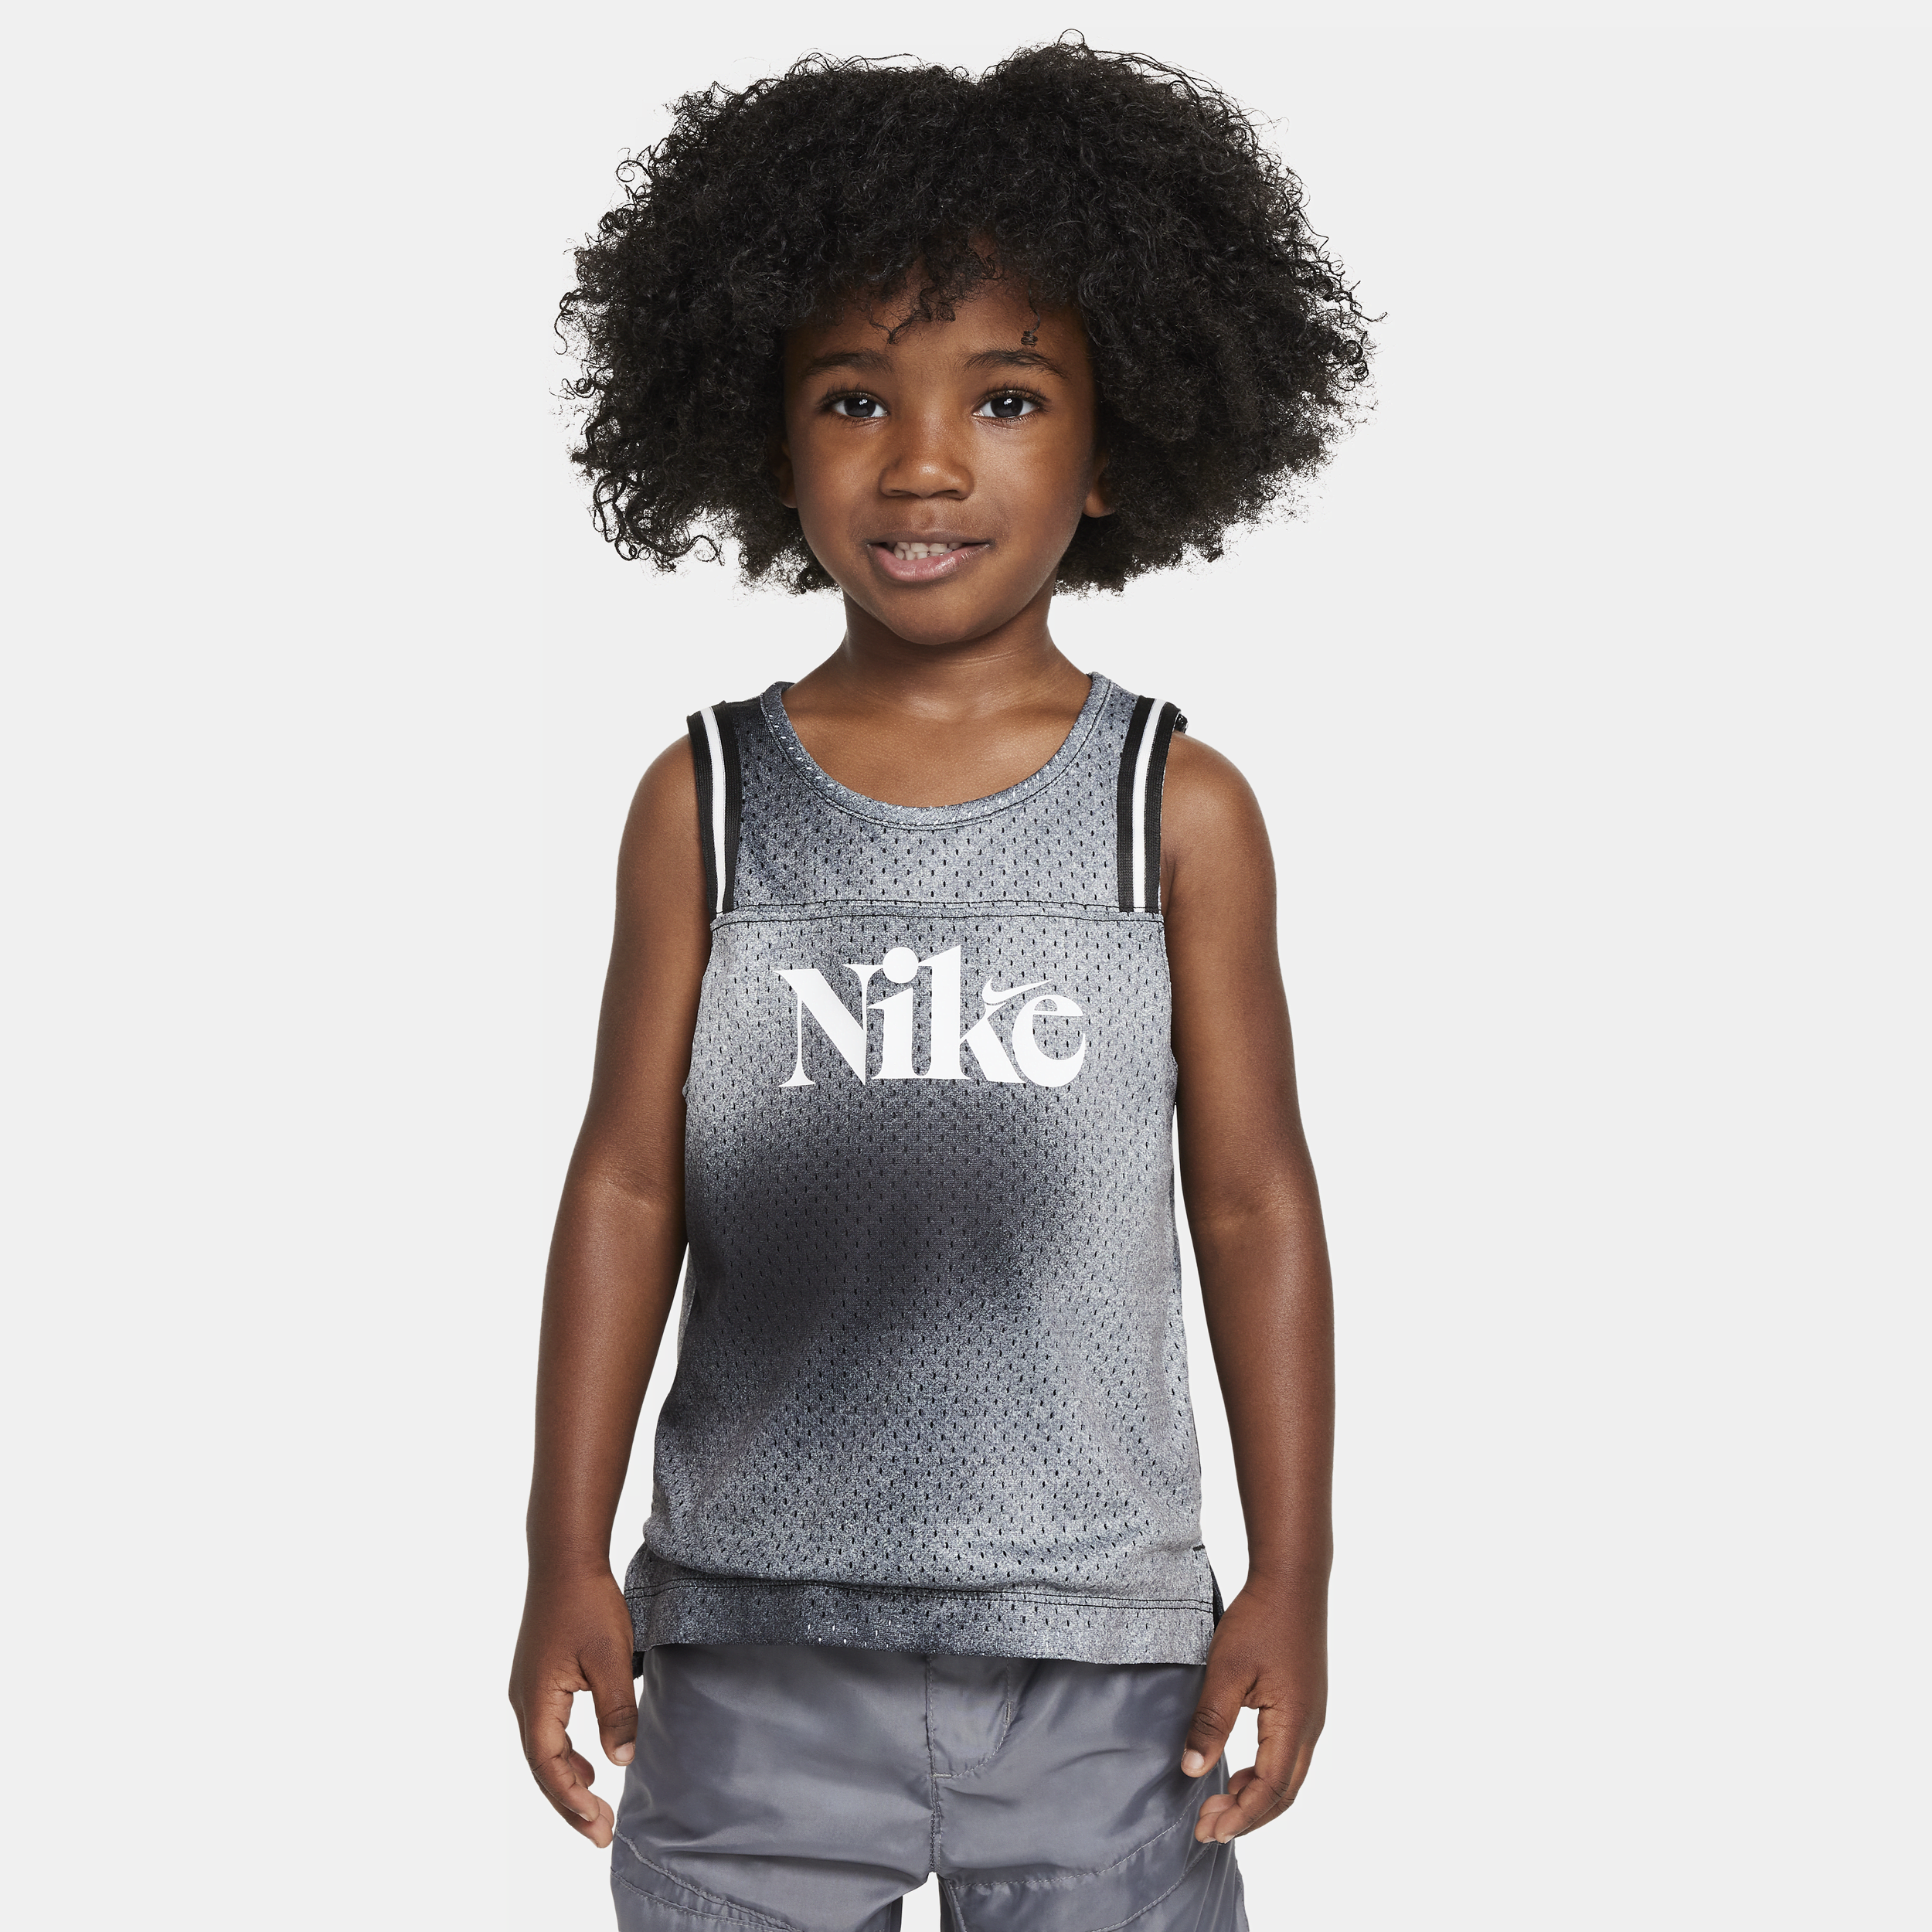 Nike Babies' Culture Of Basketball Printed Pinnie Toddler Top In Black